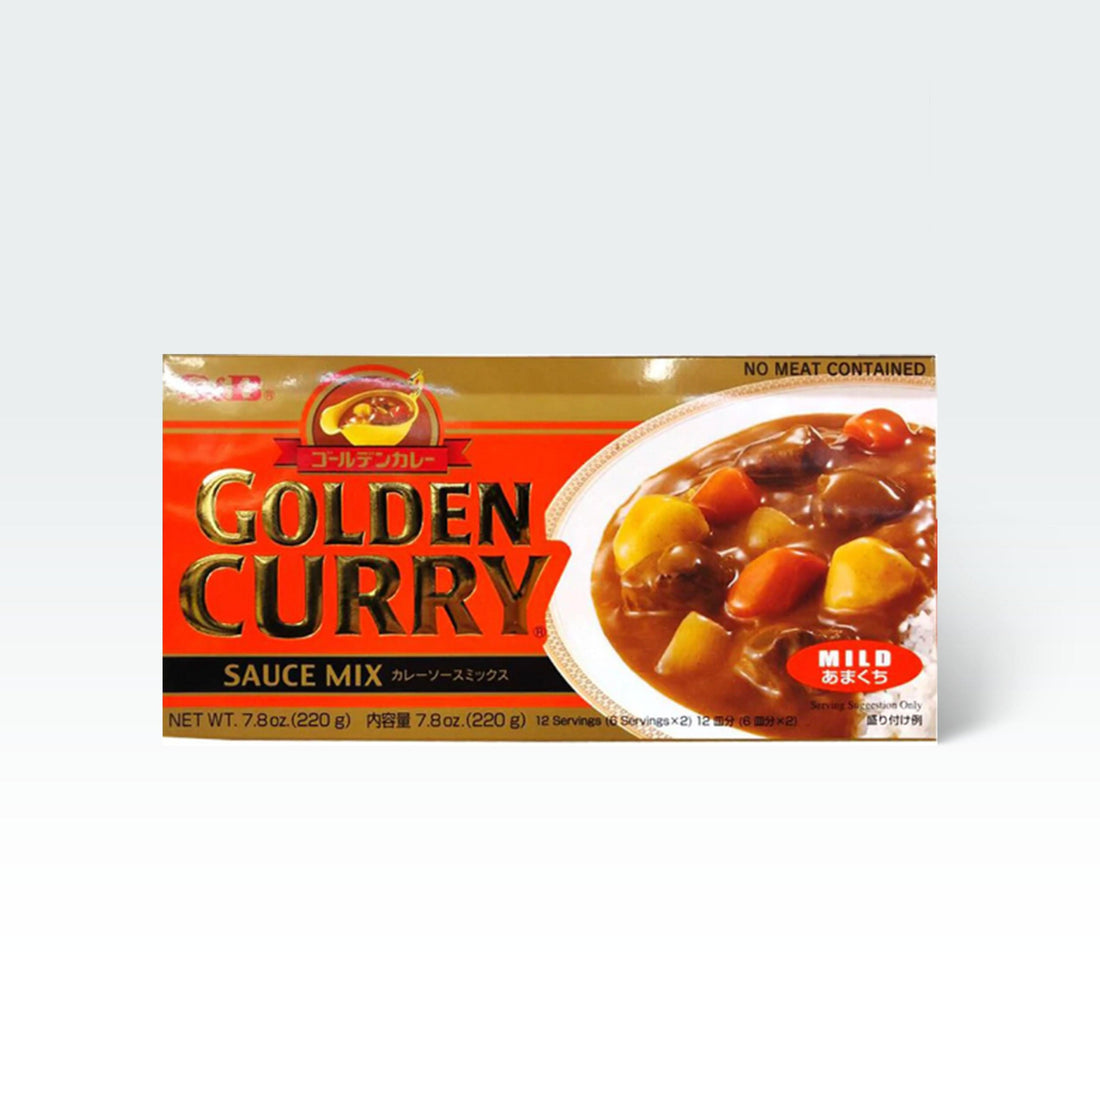 S&B Golden Curry Sauce Mix Mild 7.8oz(220g) - Anytime Basket